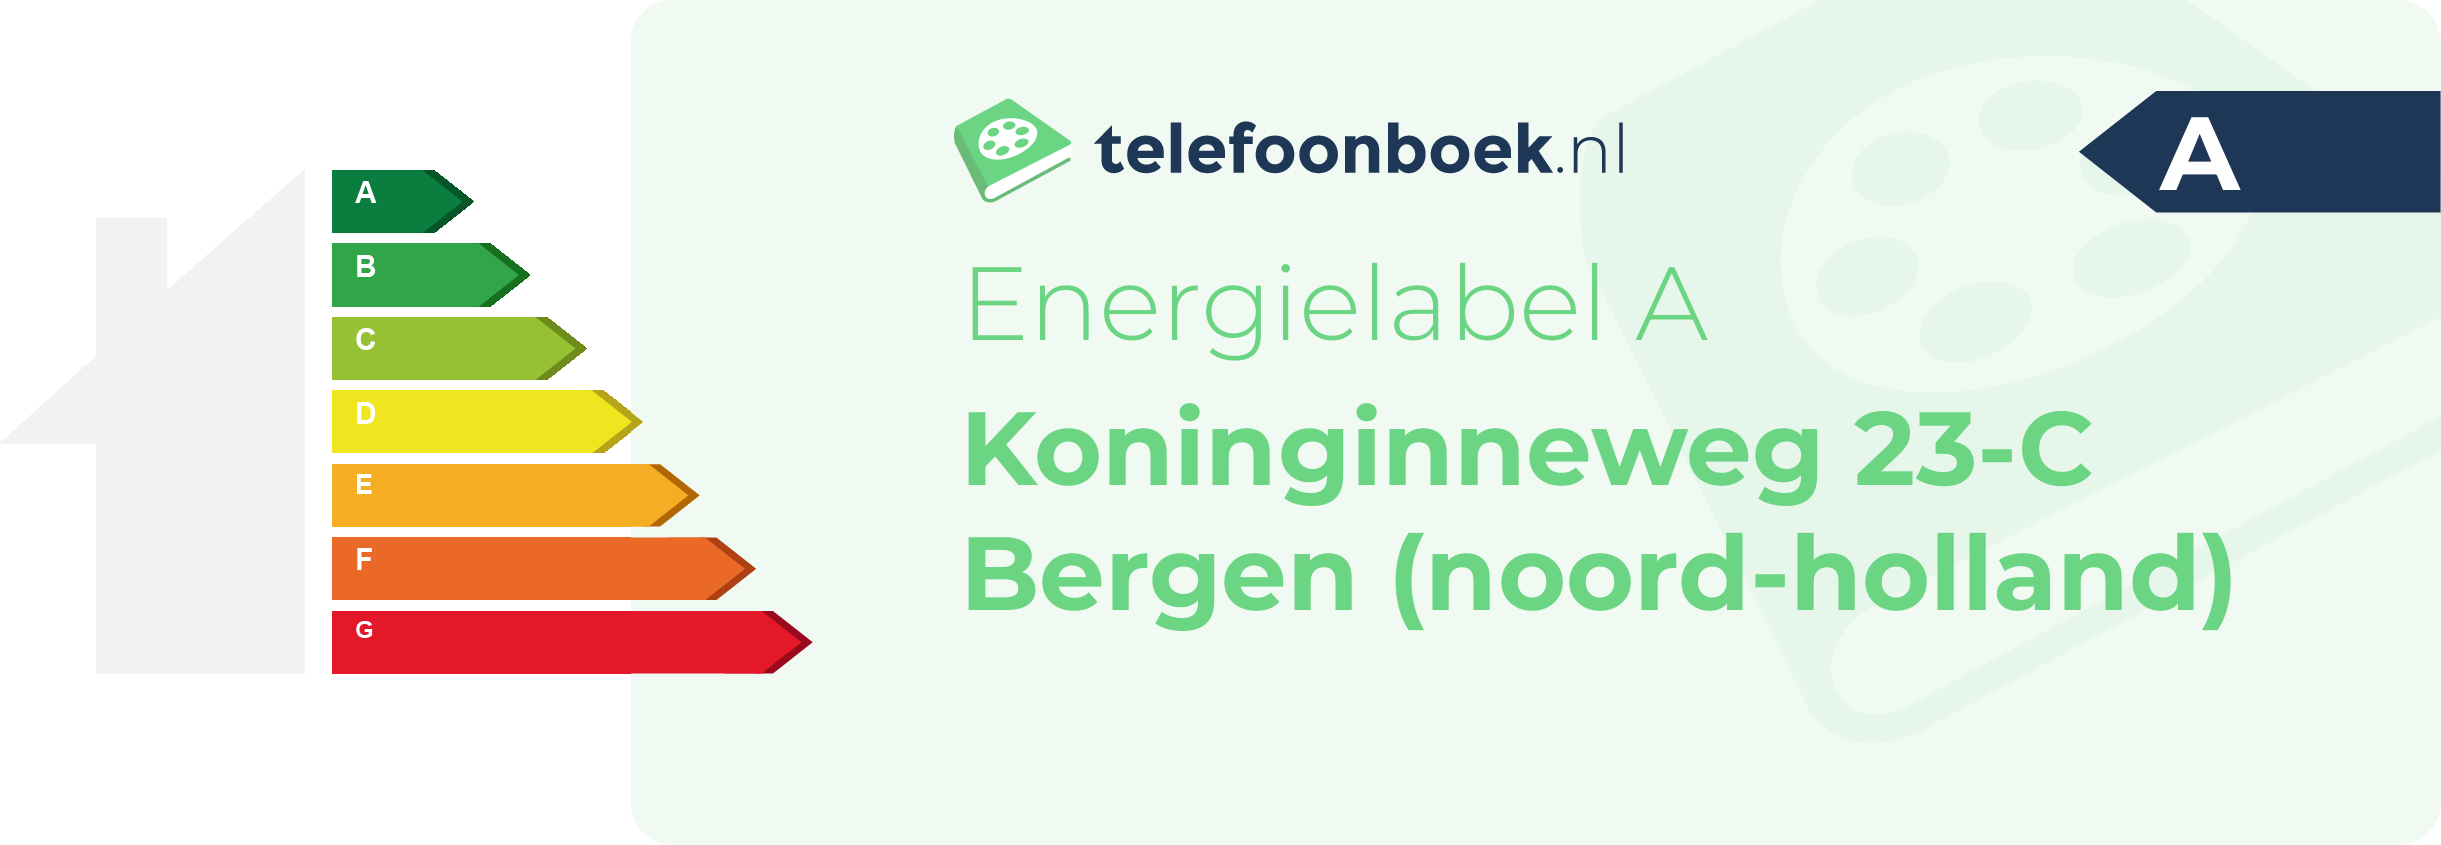 Energielabel Koninginneweg 23-C Bergen (Noord-Holland)